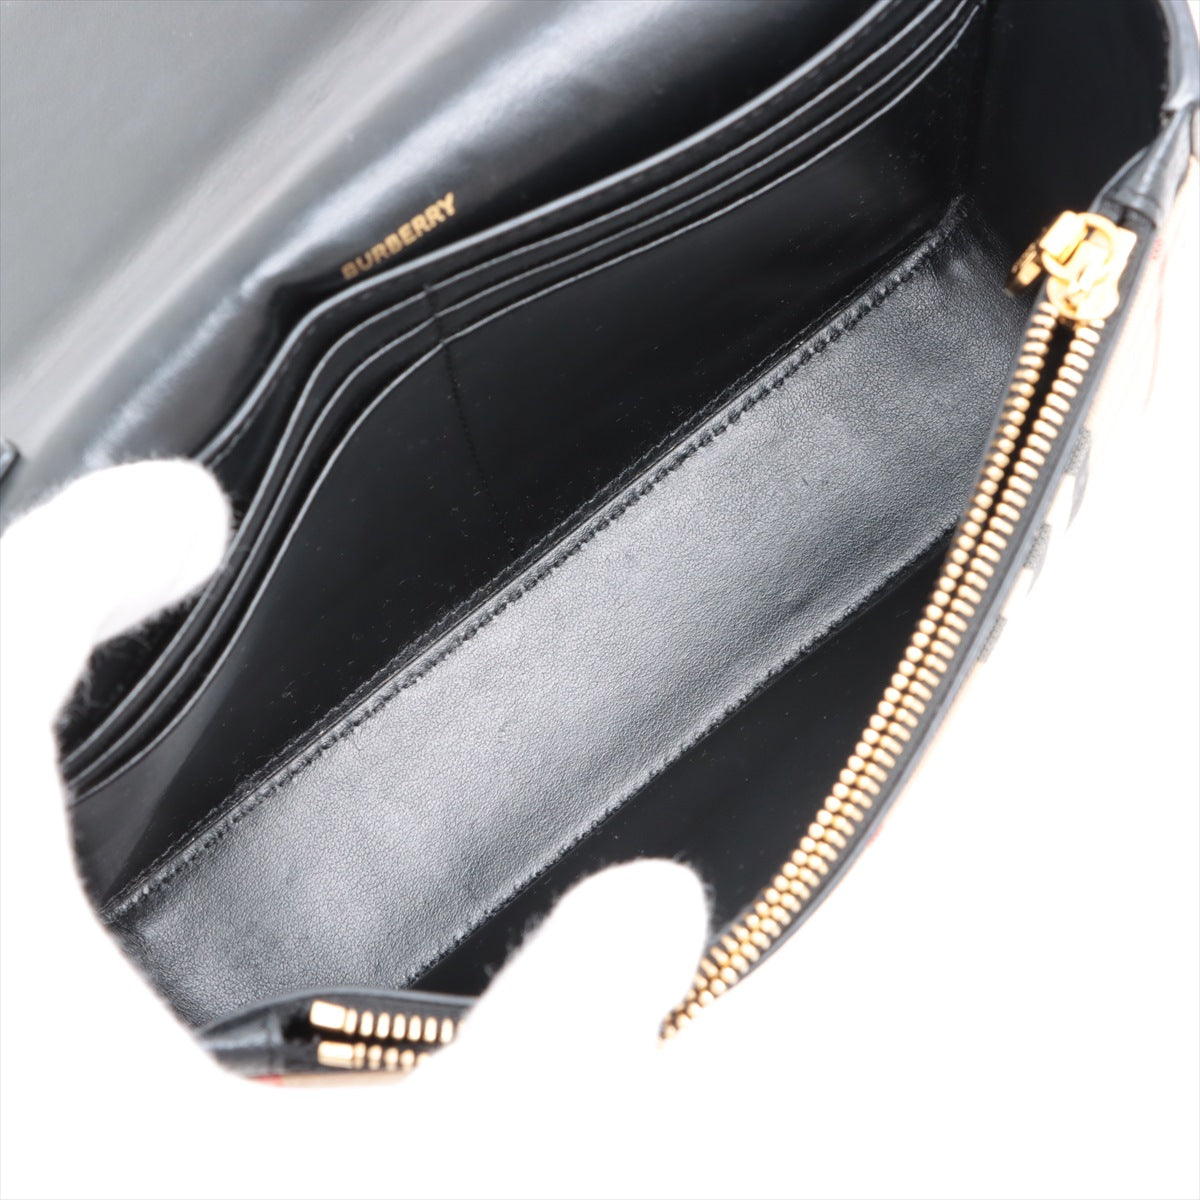 Burberry Nova Check Canvas Leather Shoulder Bag Black